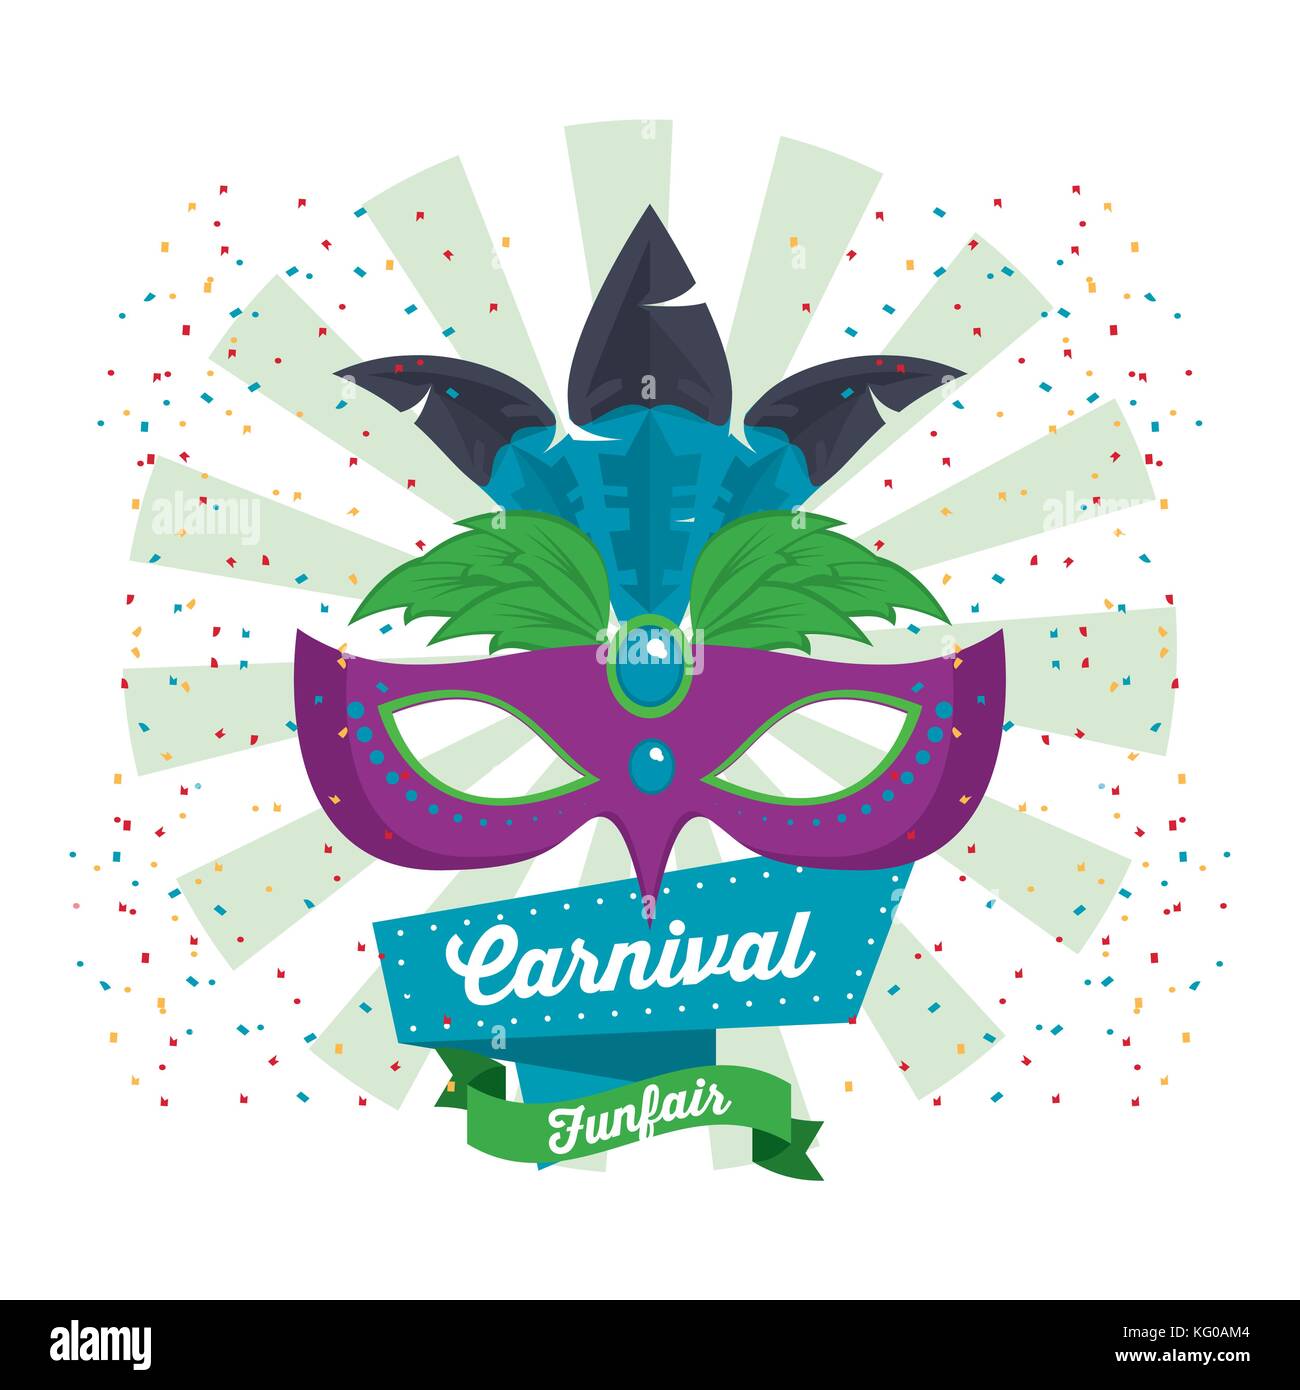 Conception carnaval mascara Image Vectorielle Stock - Alamy